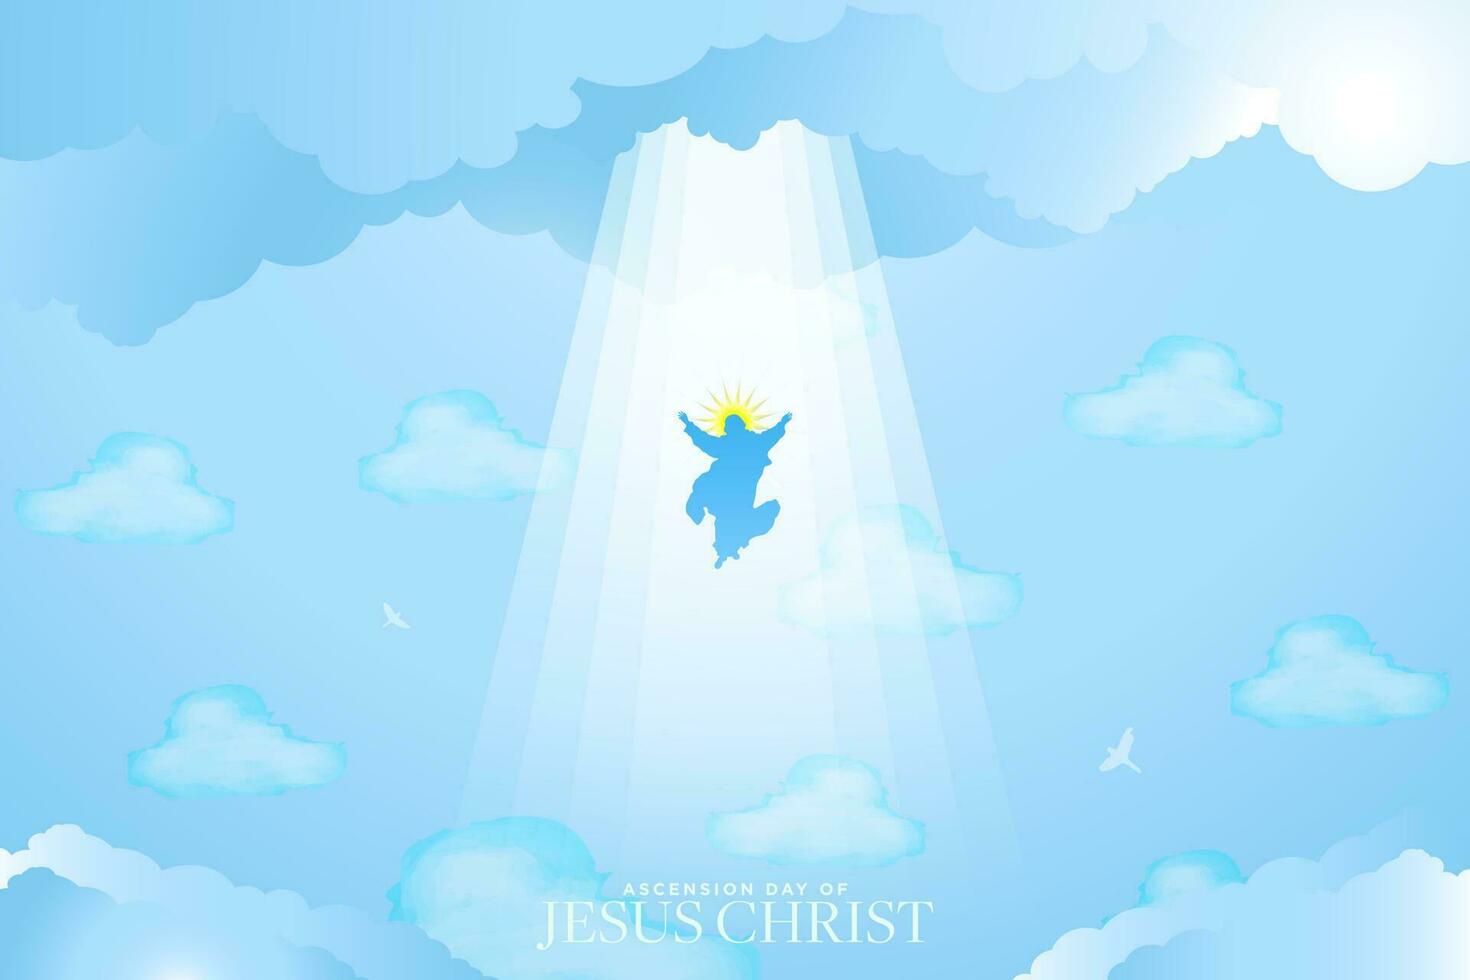 Ascension day of Jesus Christ on Blue Sky vector